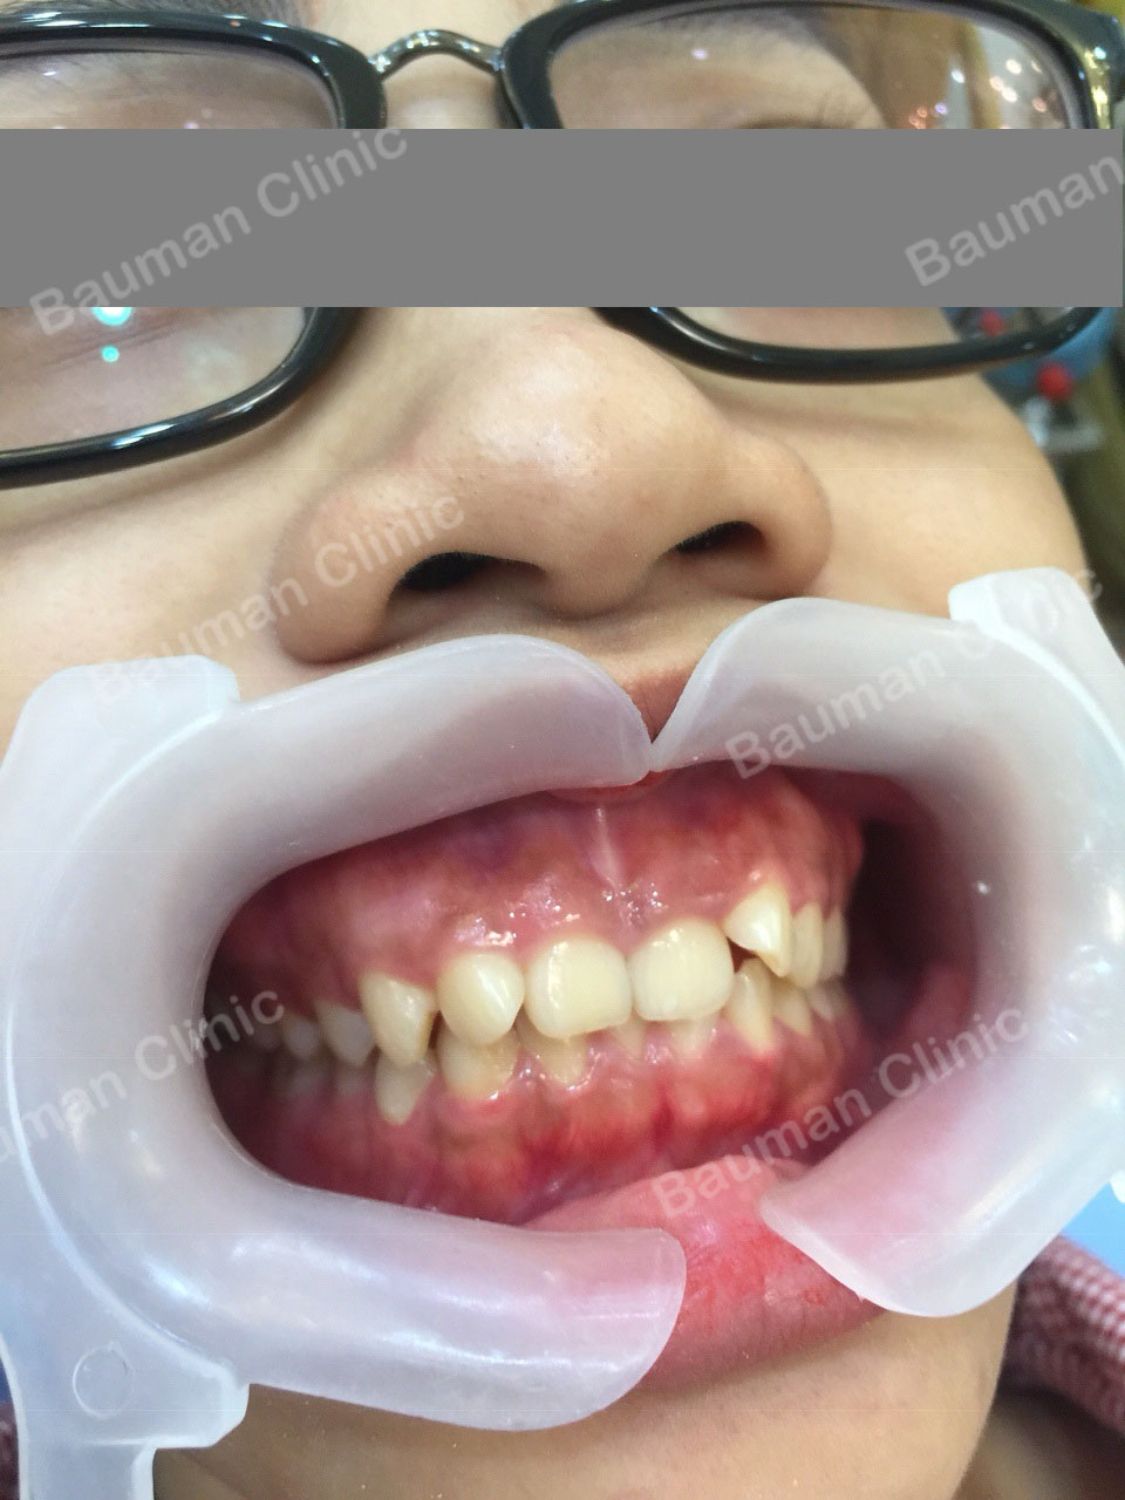 Ca niềng răng số 5047 - Nha khoa Bauman Clinic